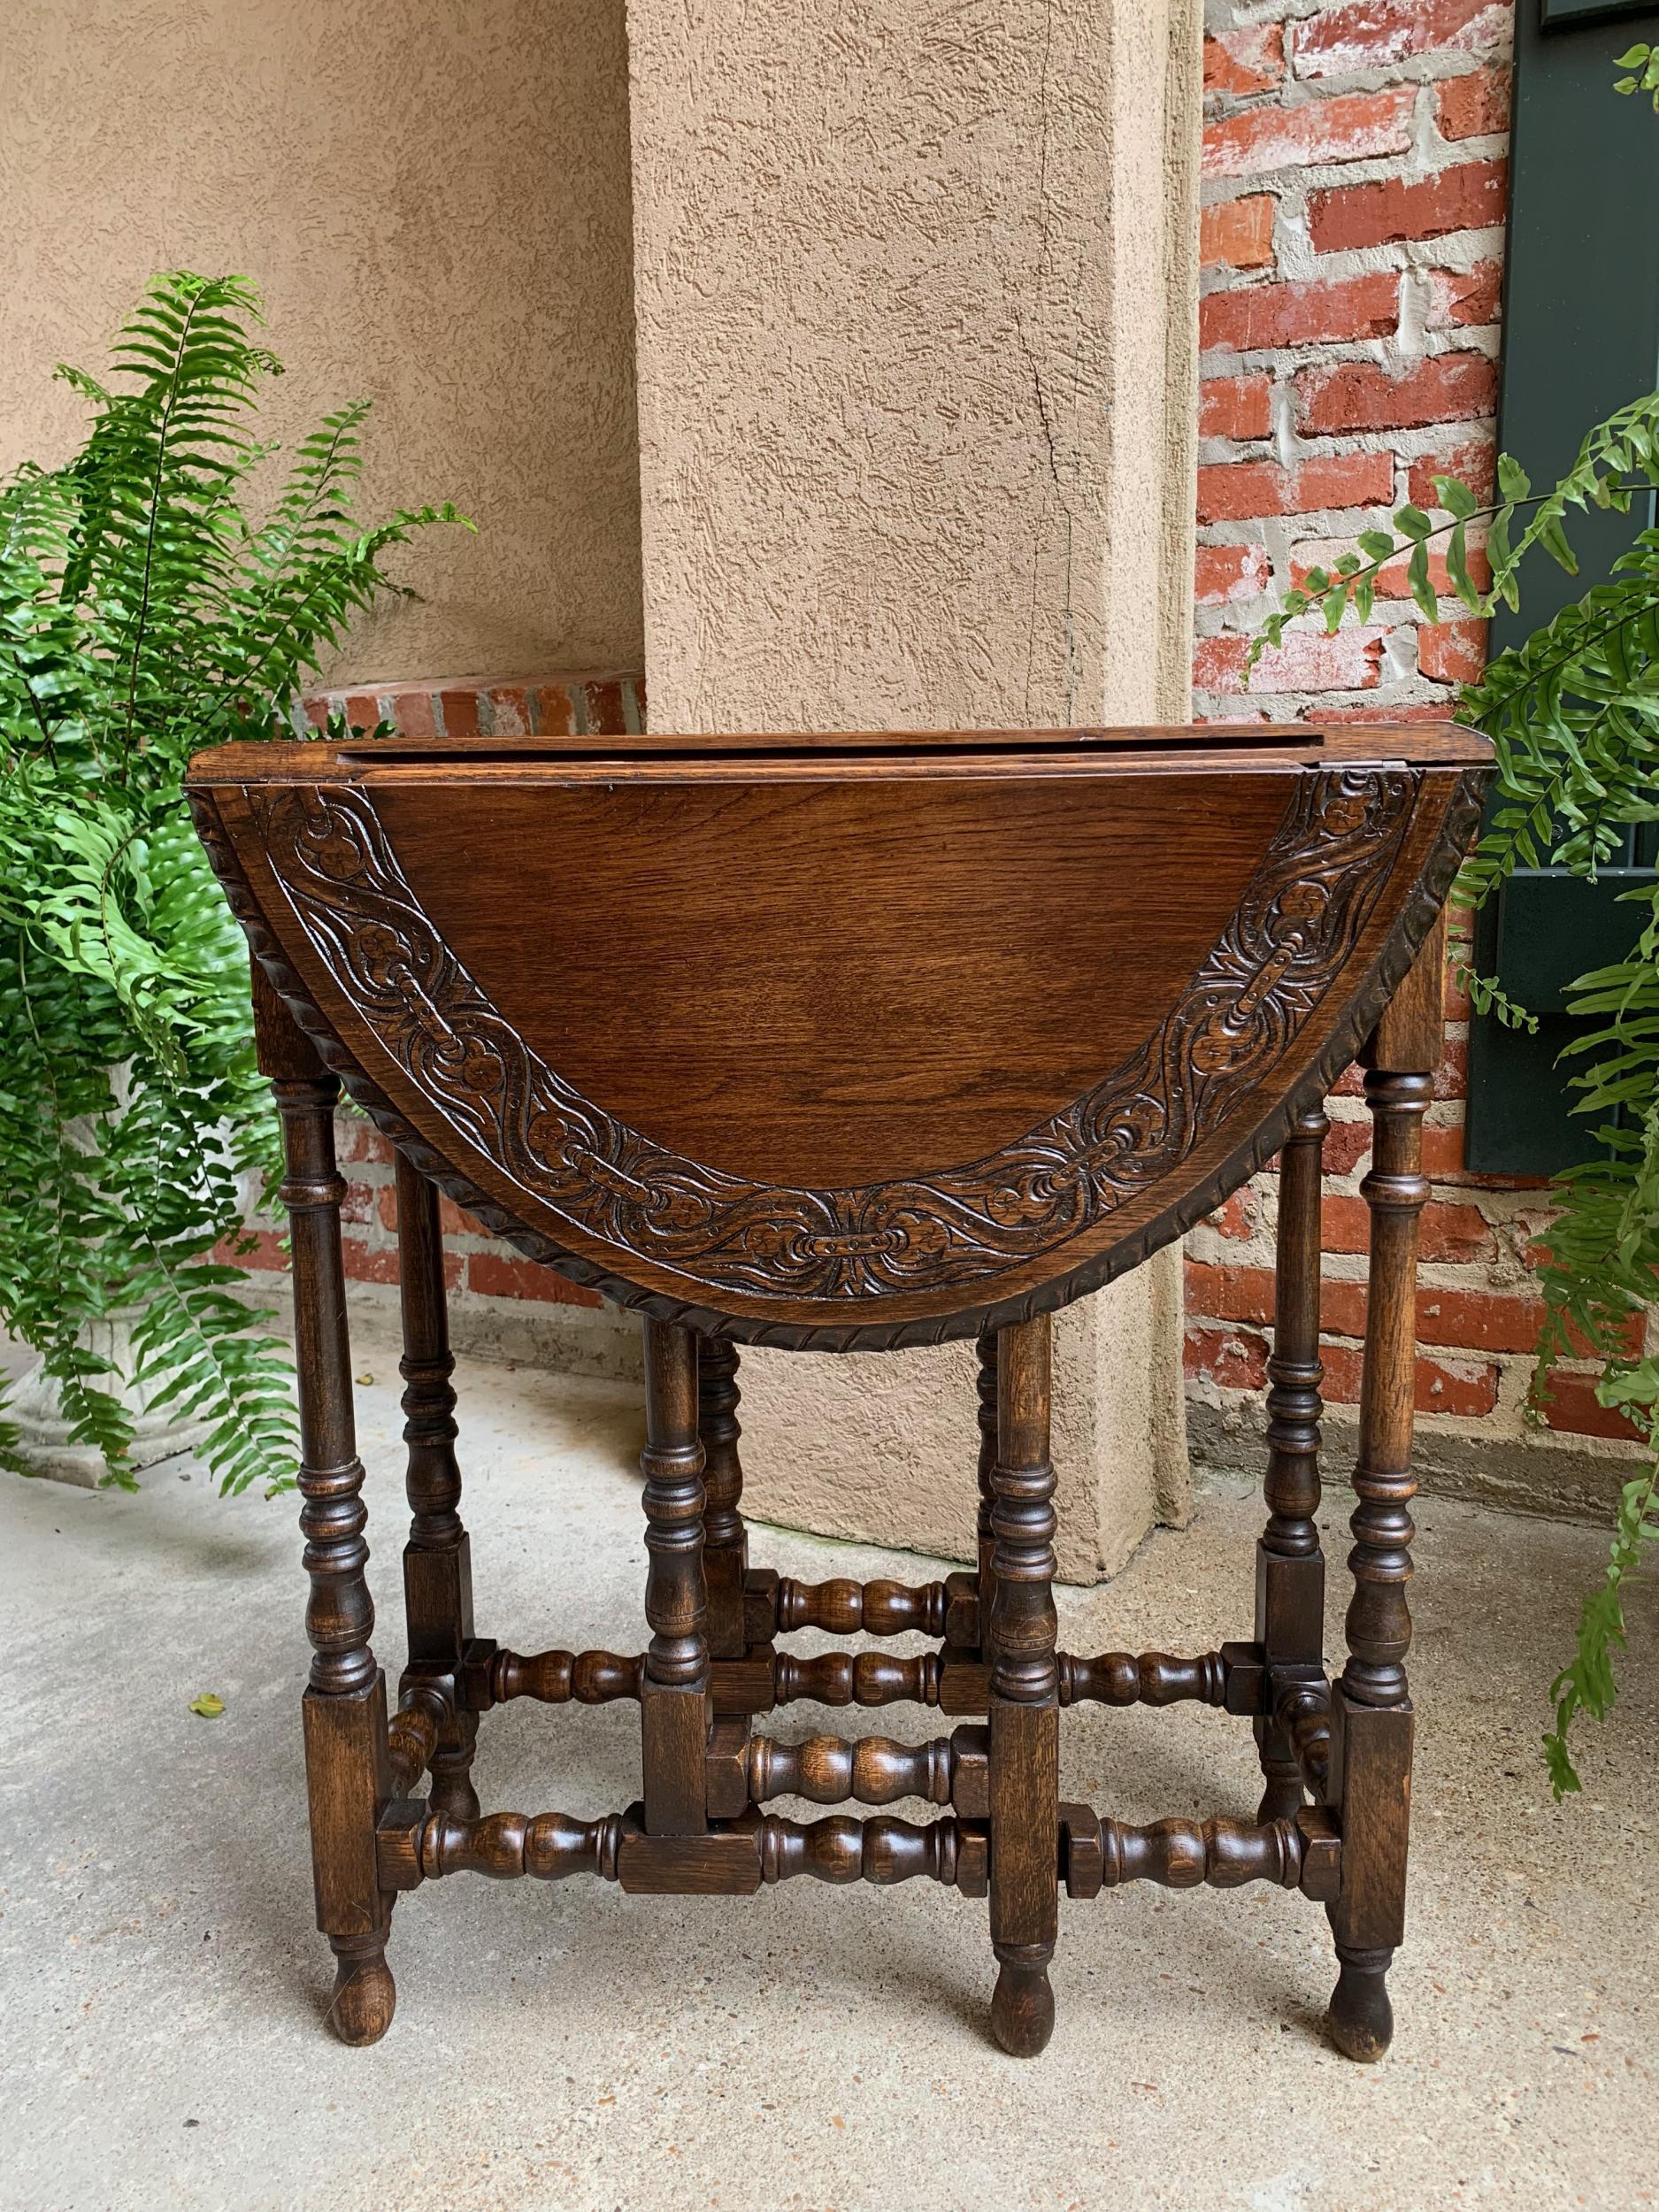 British Petite Antique English Oak Side Sofa Wine Table Drop Leaf Gate Leg Carved Oval